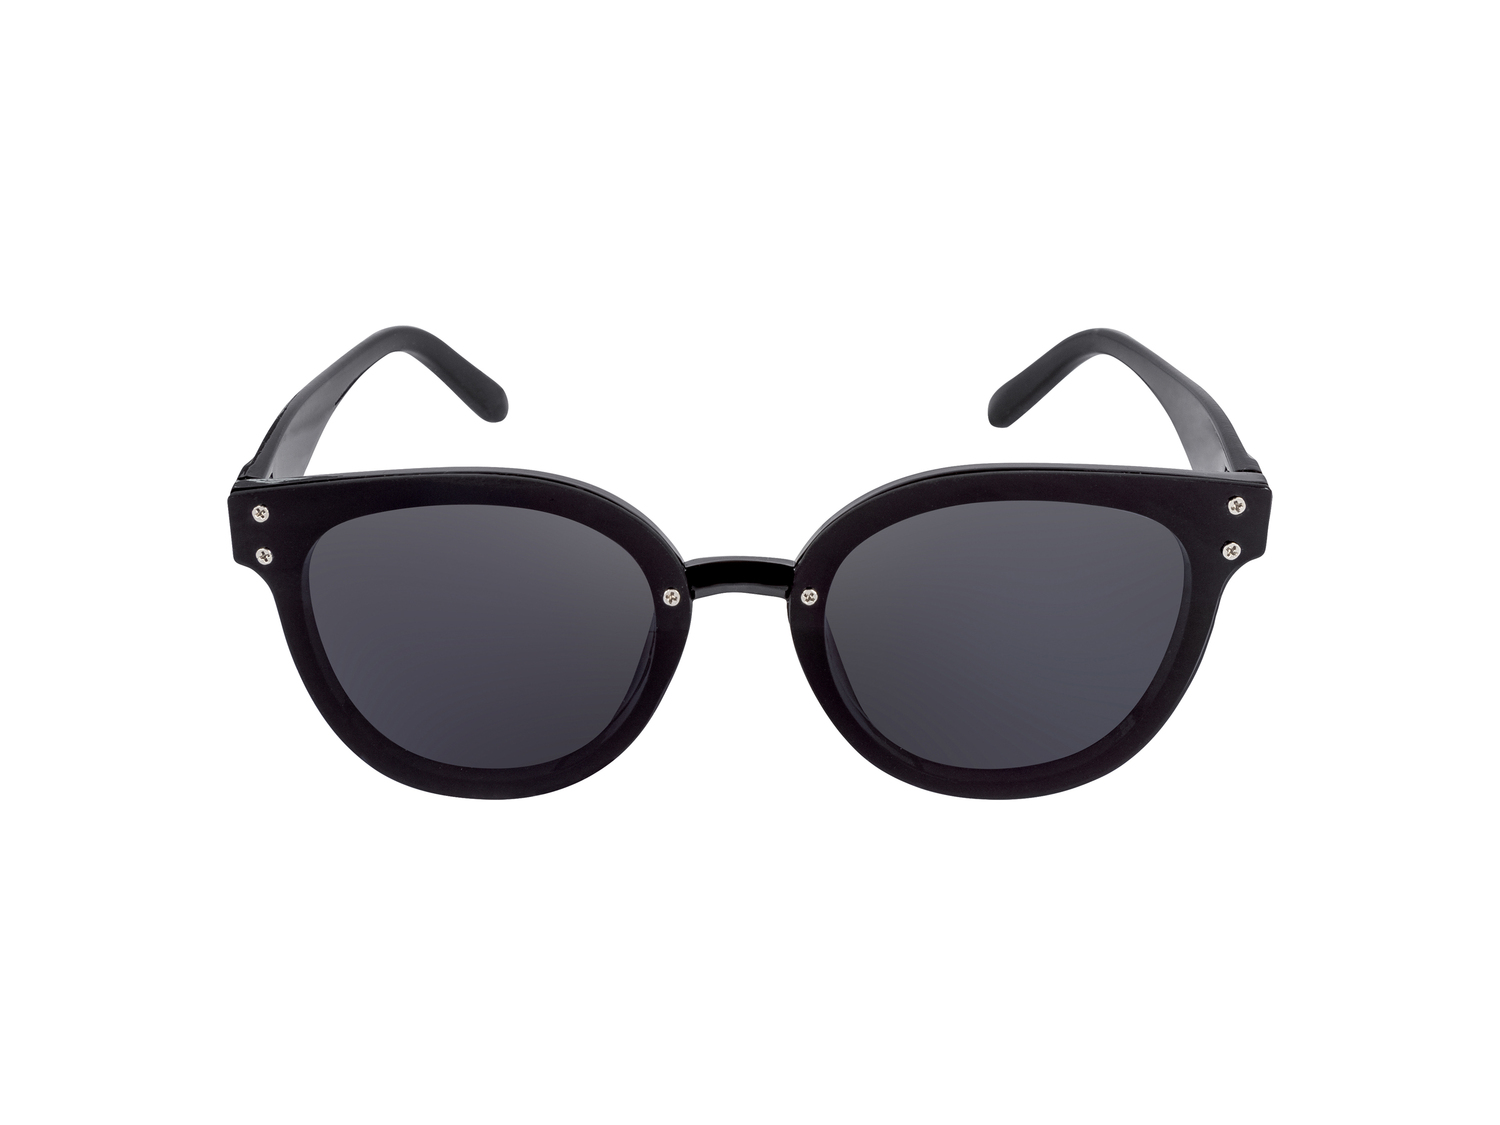 Occhiali da sole Auriol Eyewear, prezzo 2.99 &#8364; 

Caratteristiche

- 3 ...